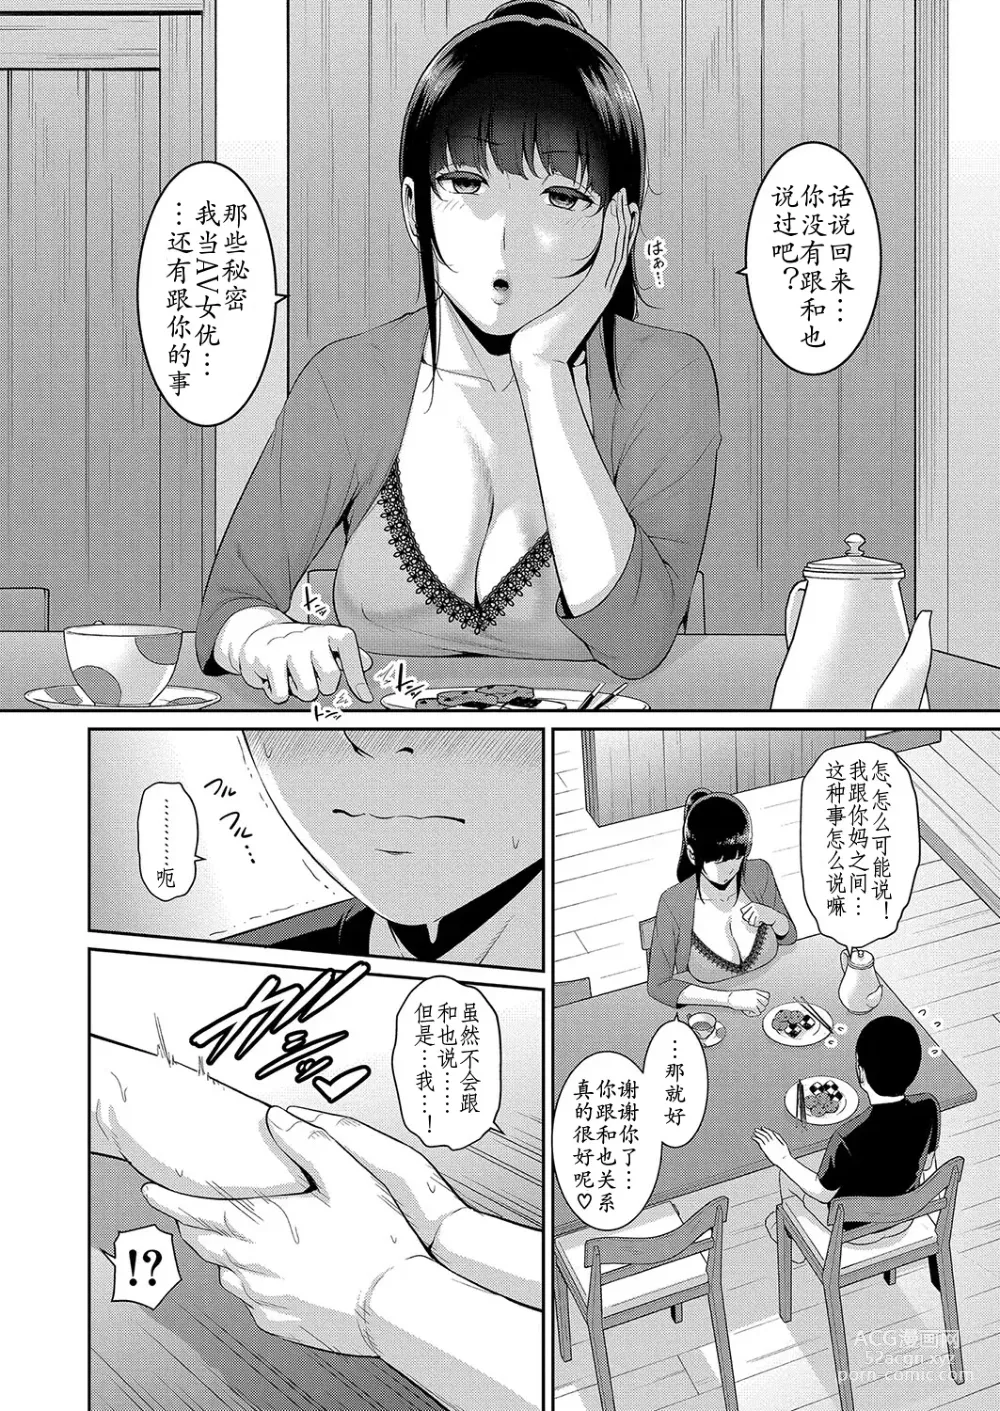 Page 7 of manga Shin Tomodachi no Hahaoya Ch. 7